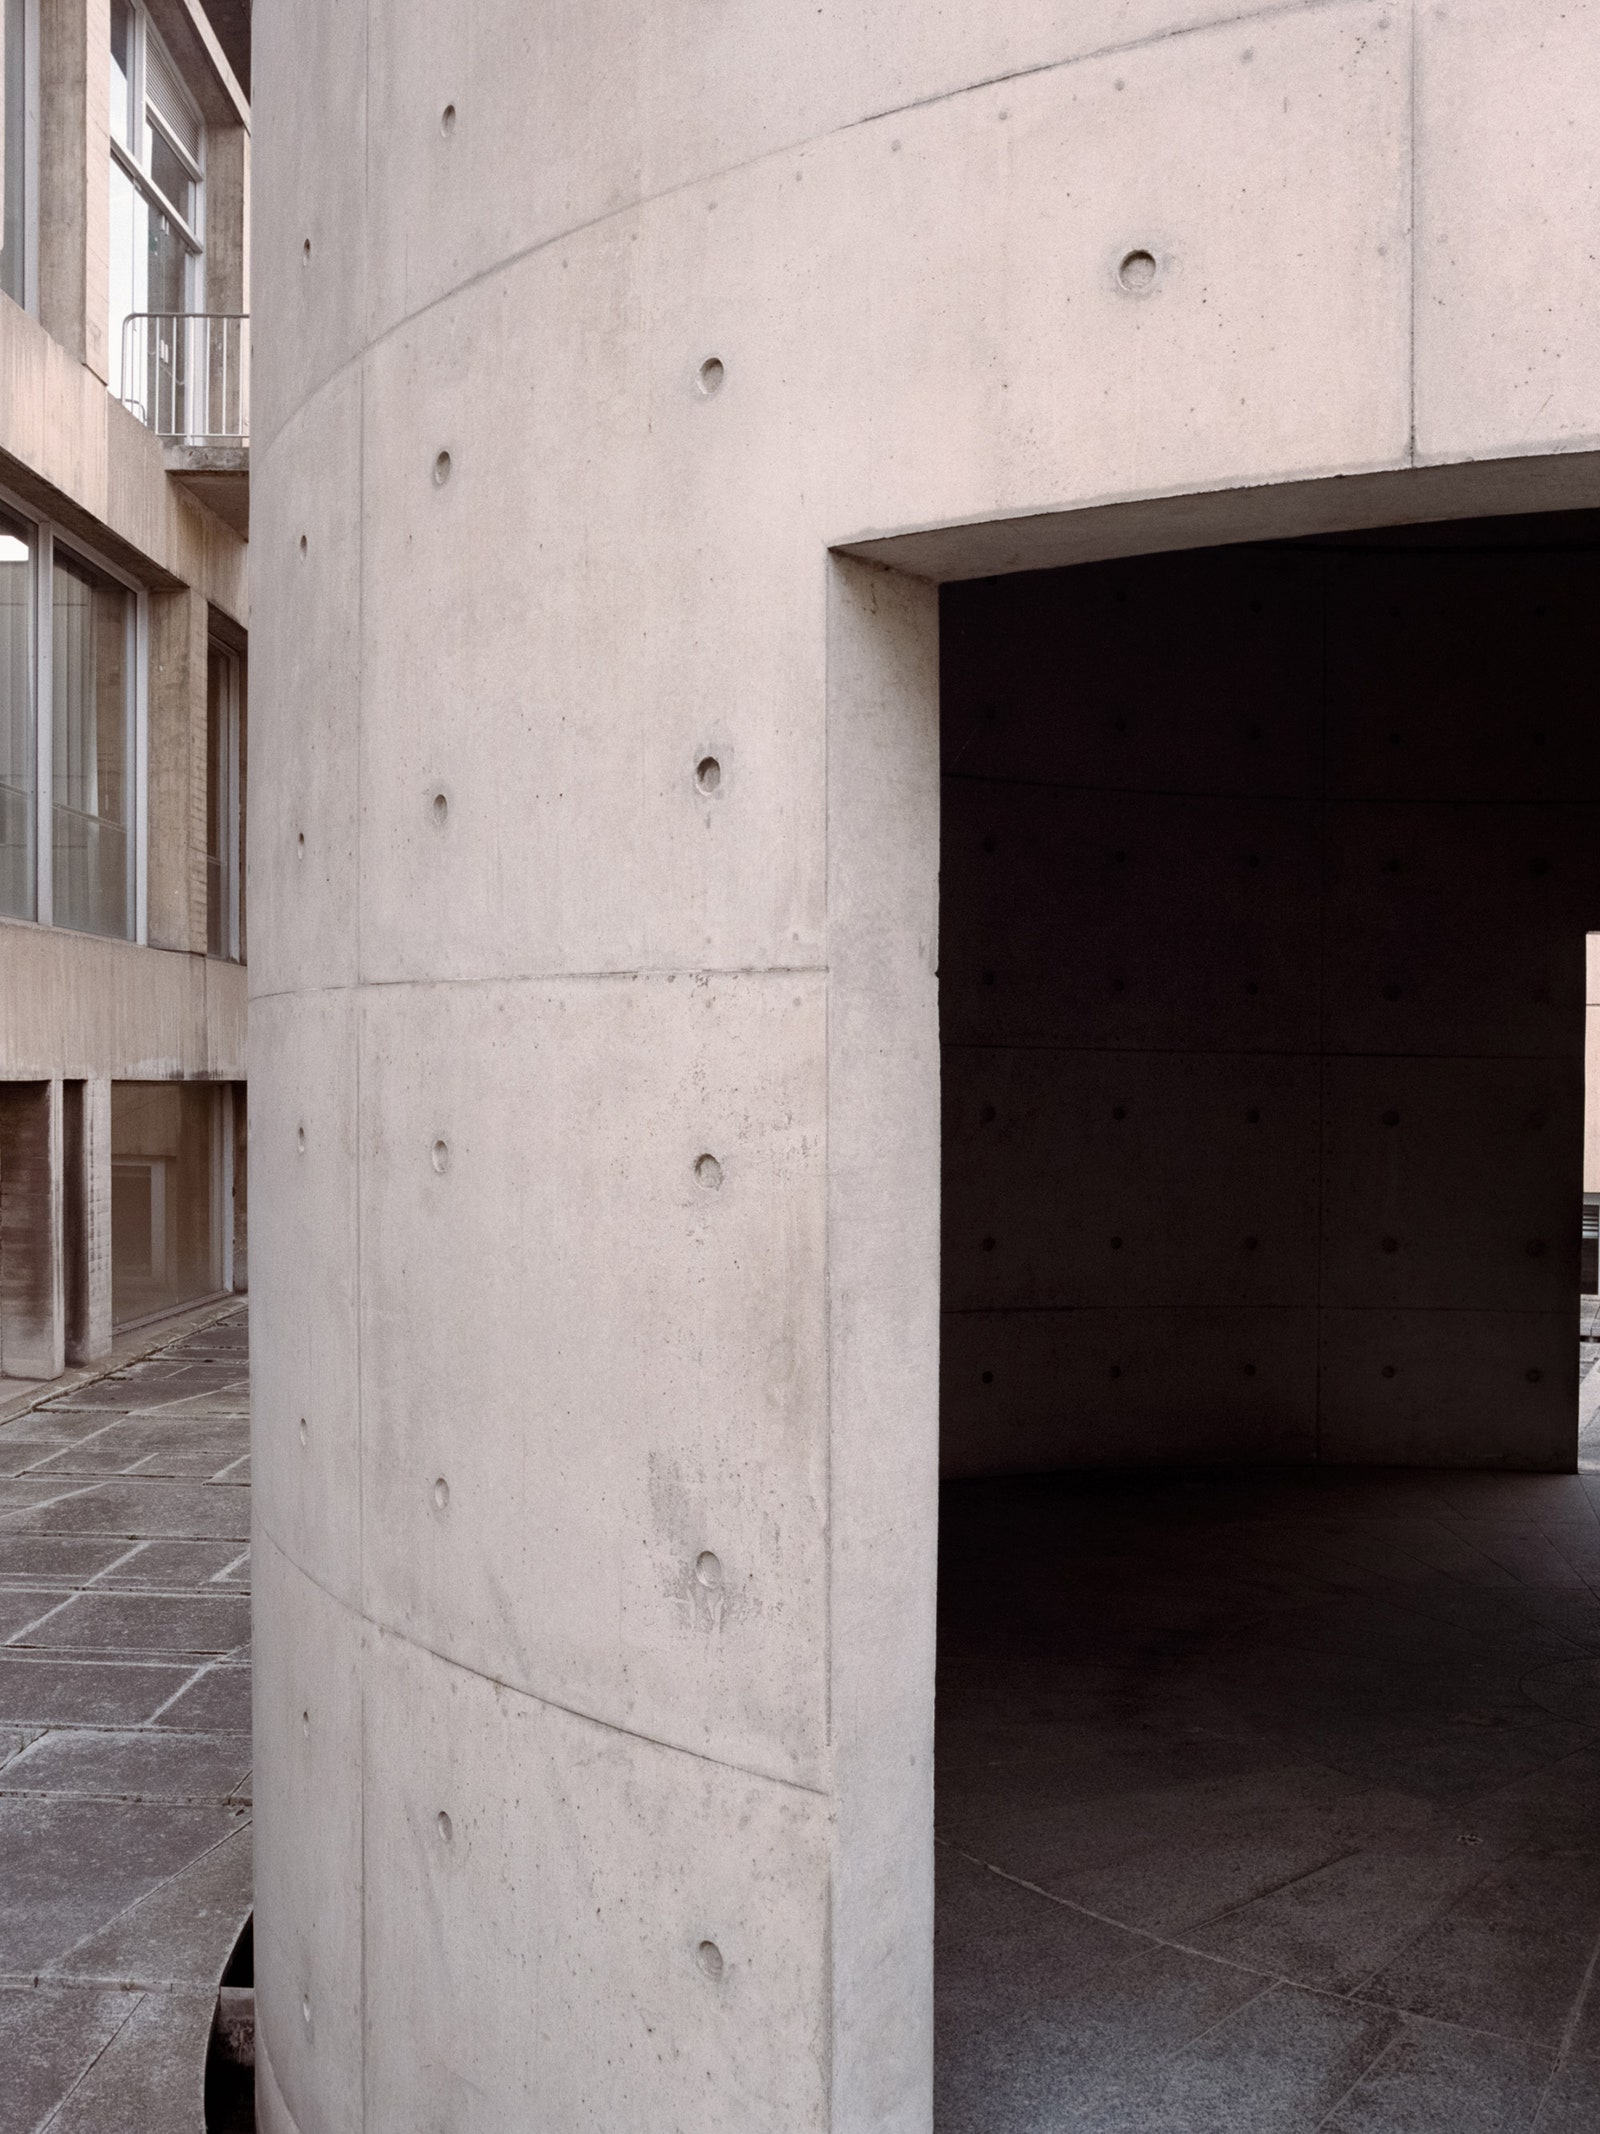 Архитектура в объективе павильон для медитации по проекту Тадао Андо